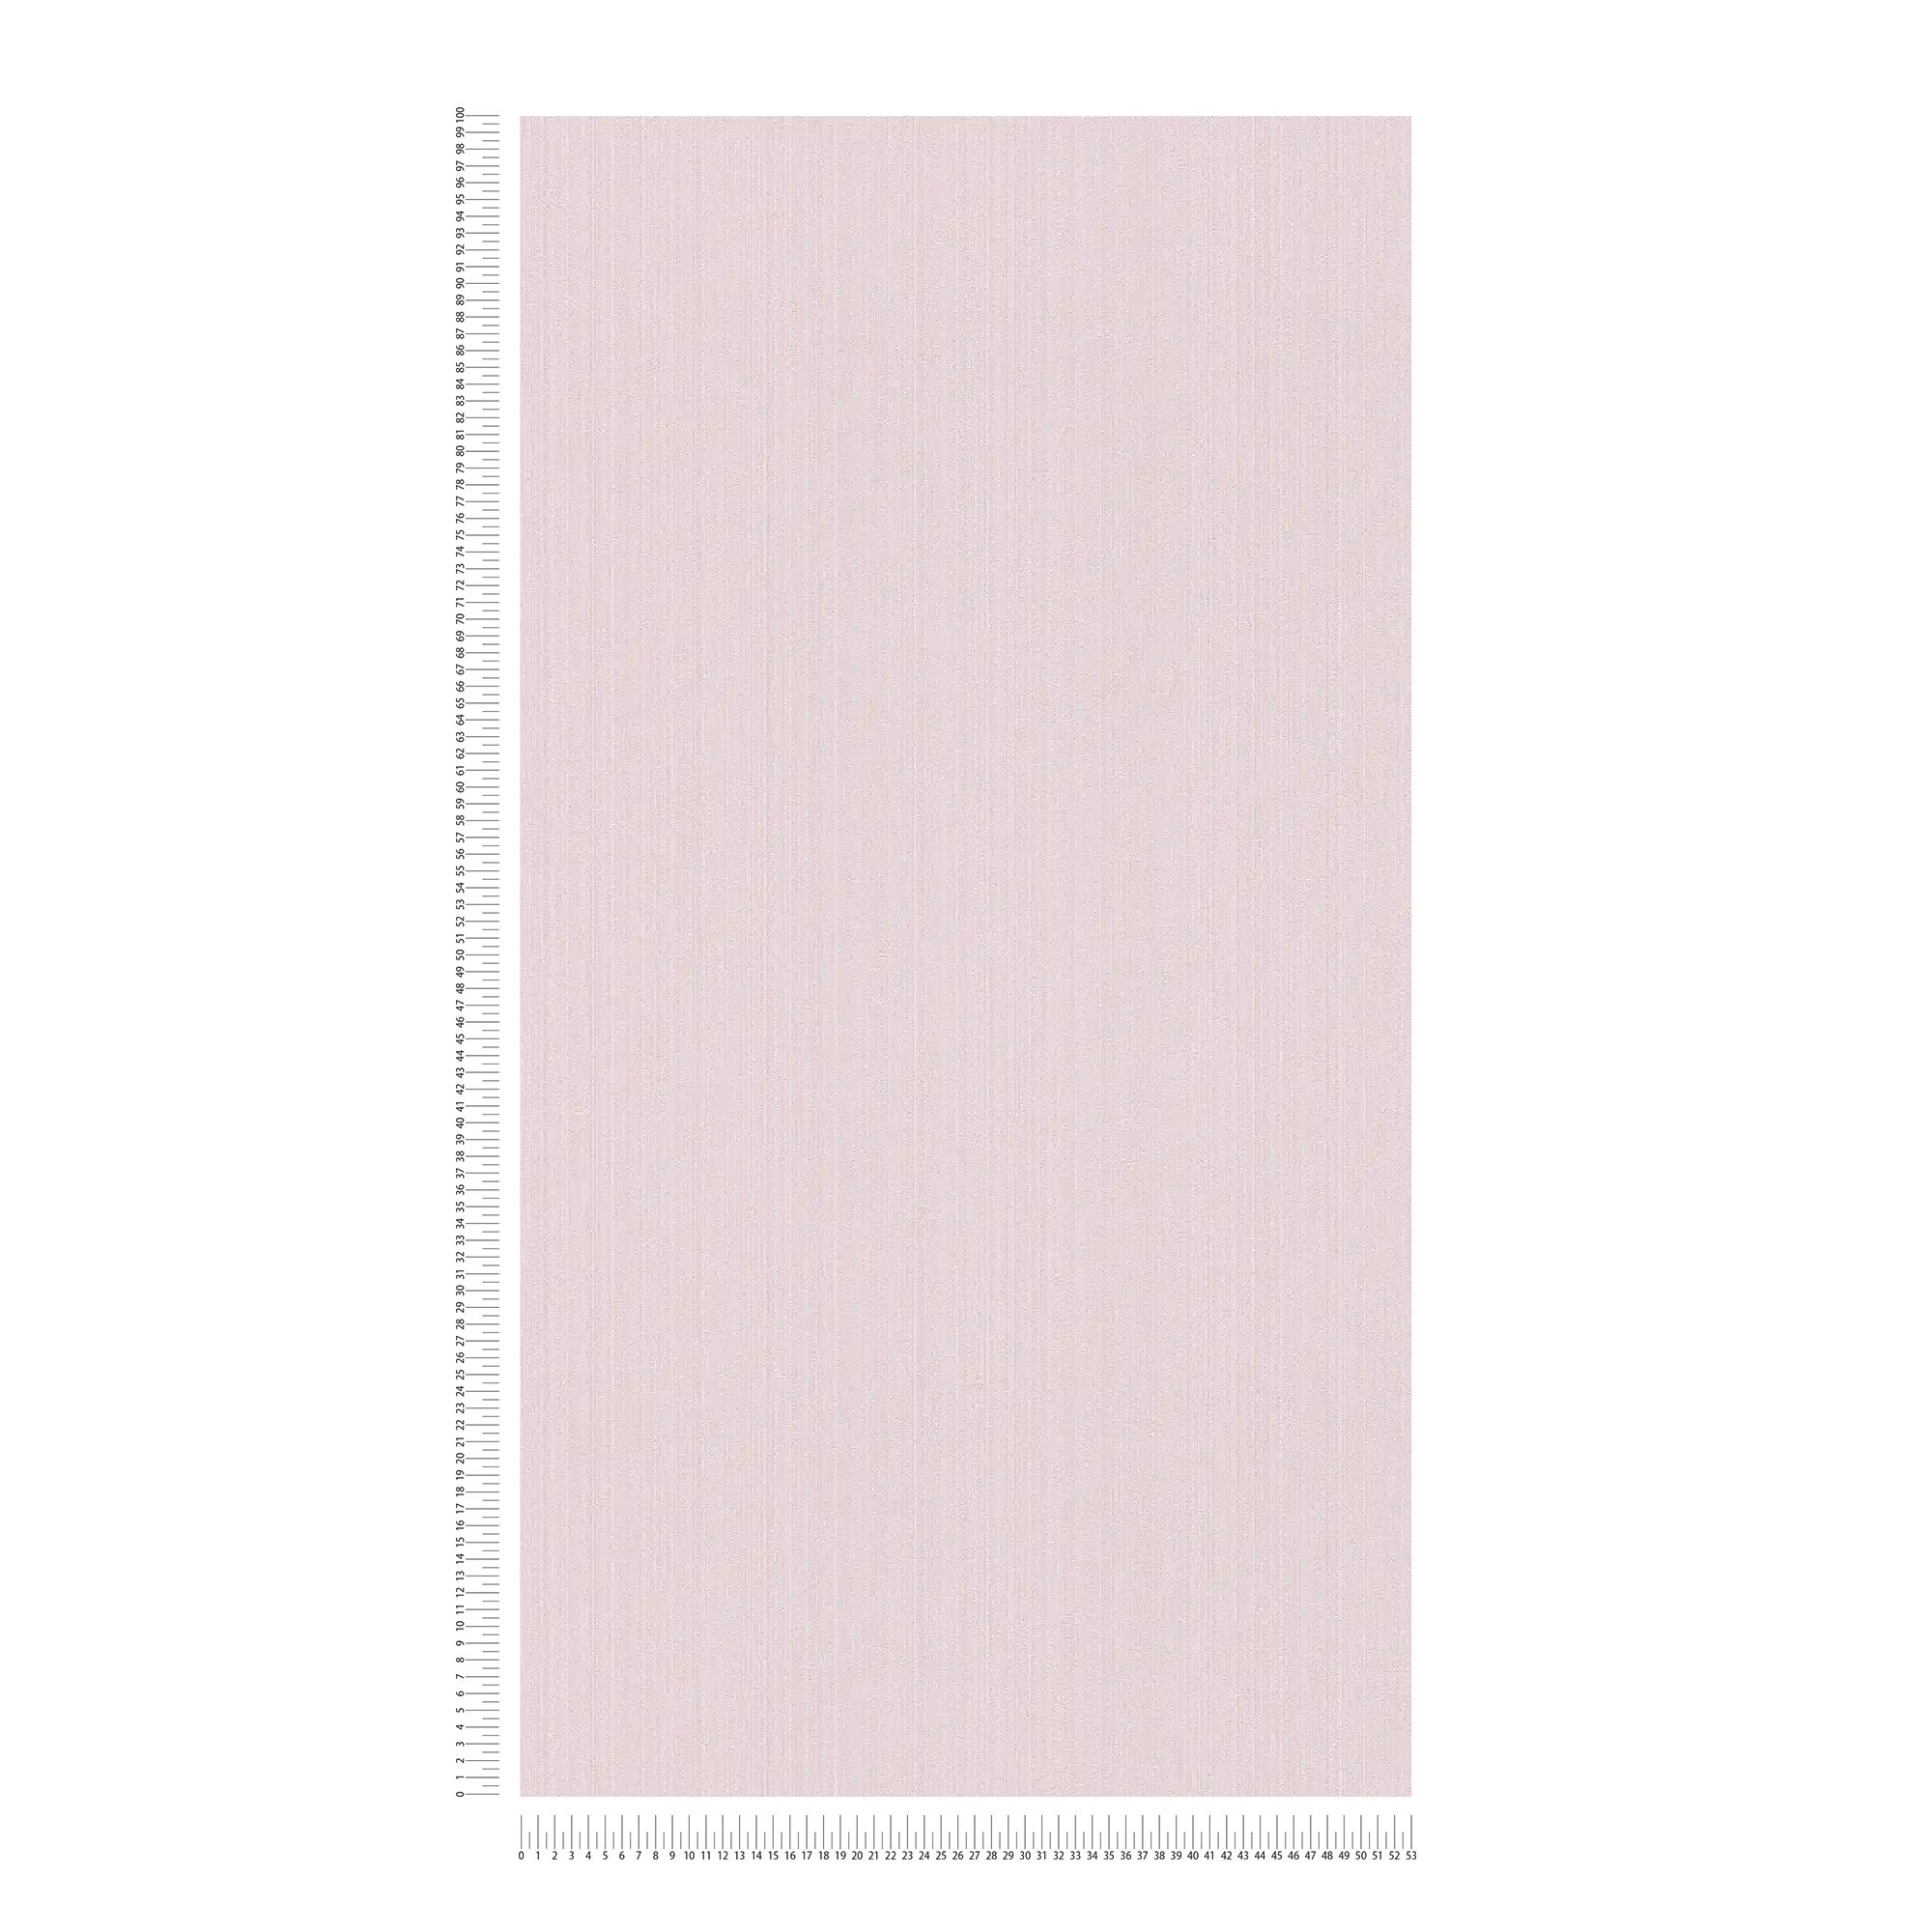             Papel pintado de seda rosa mate, liso con efecto de estructura
        